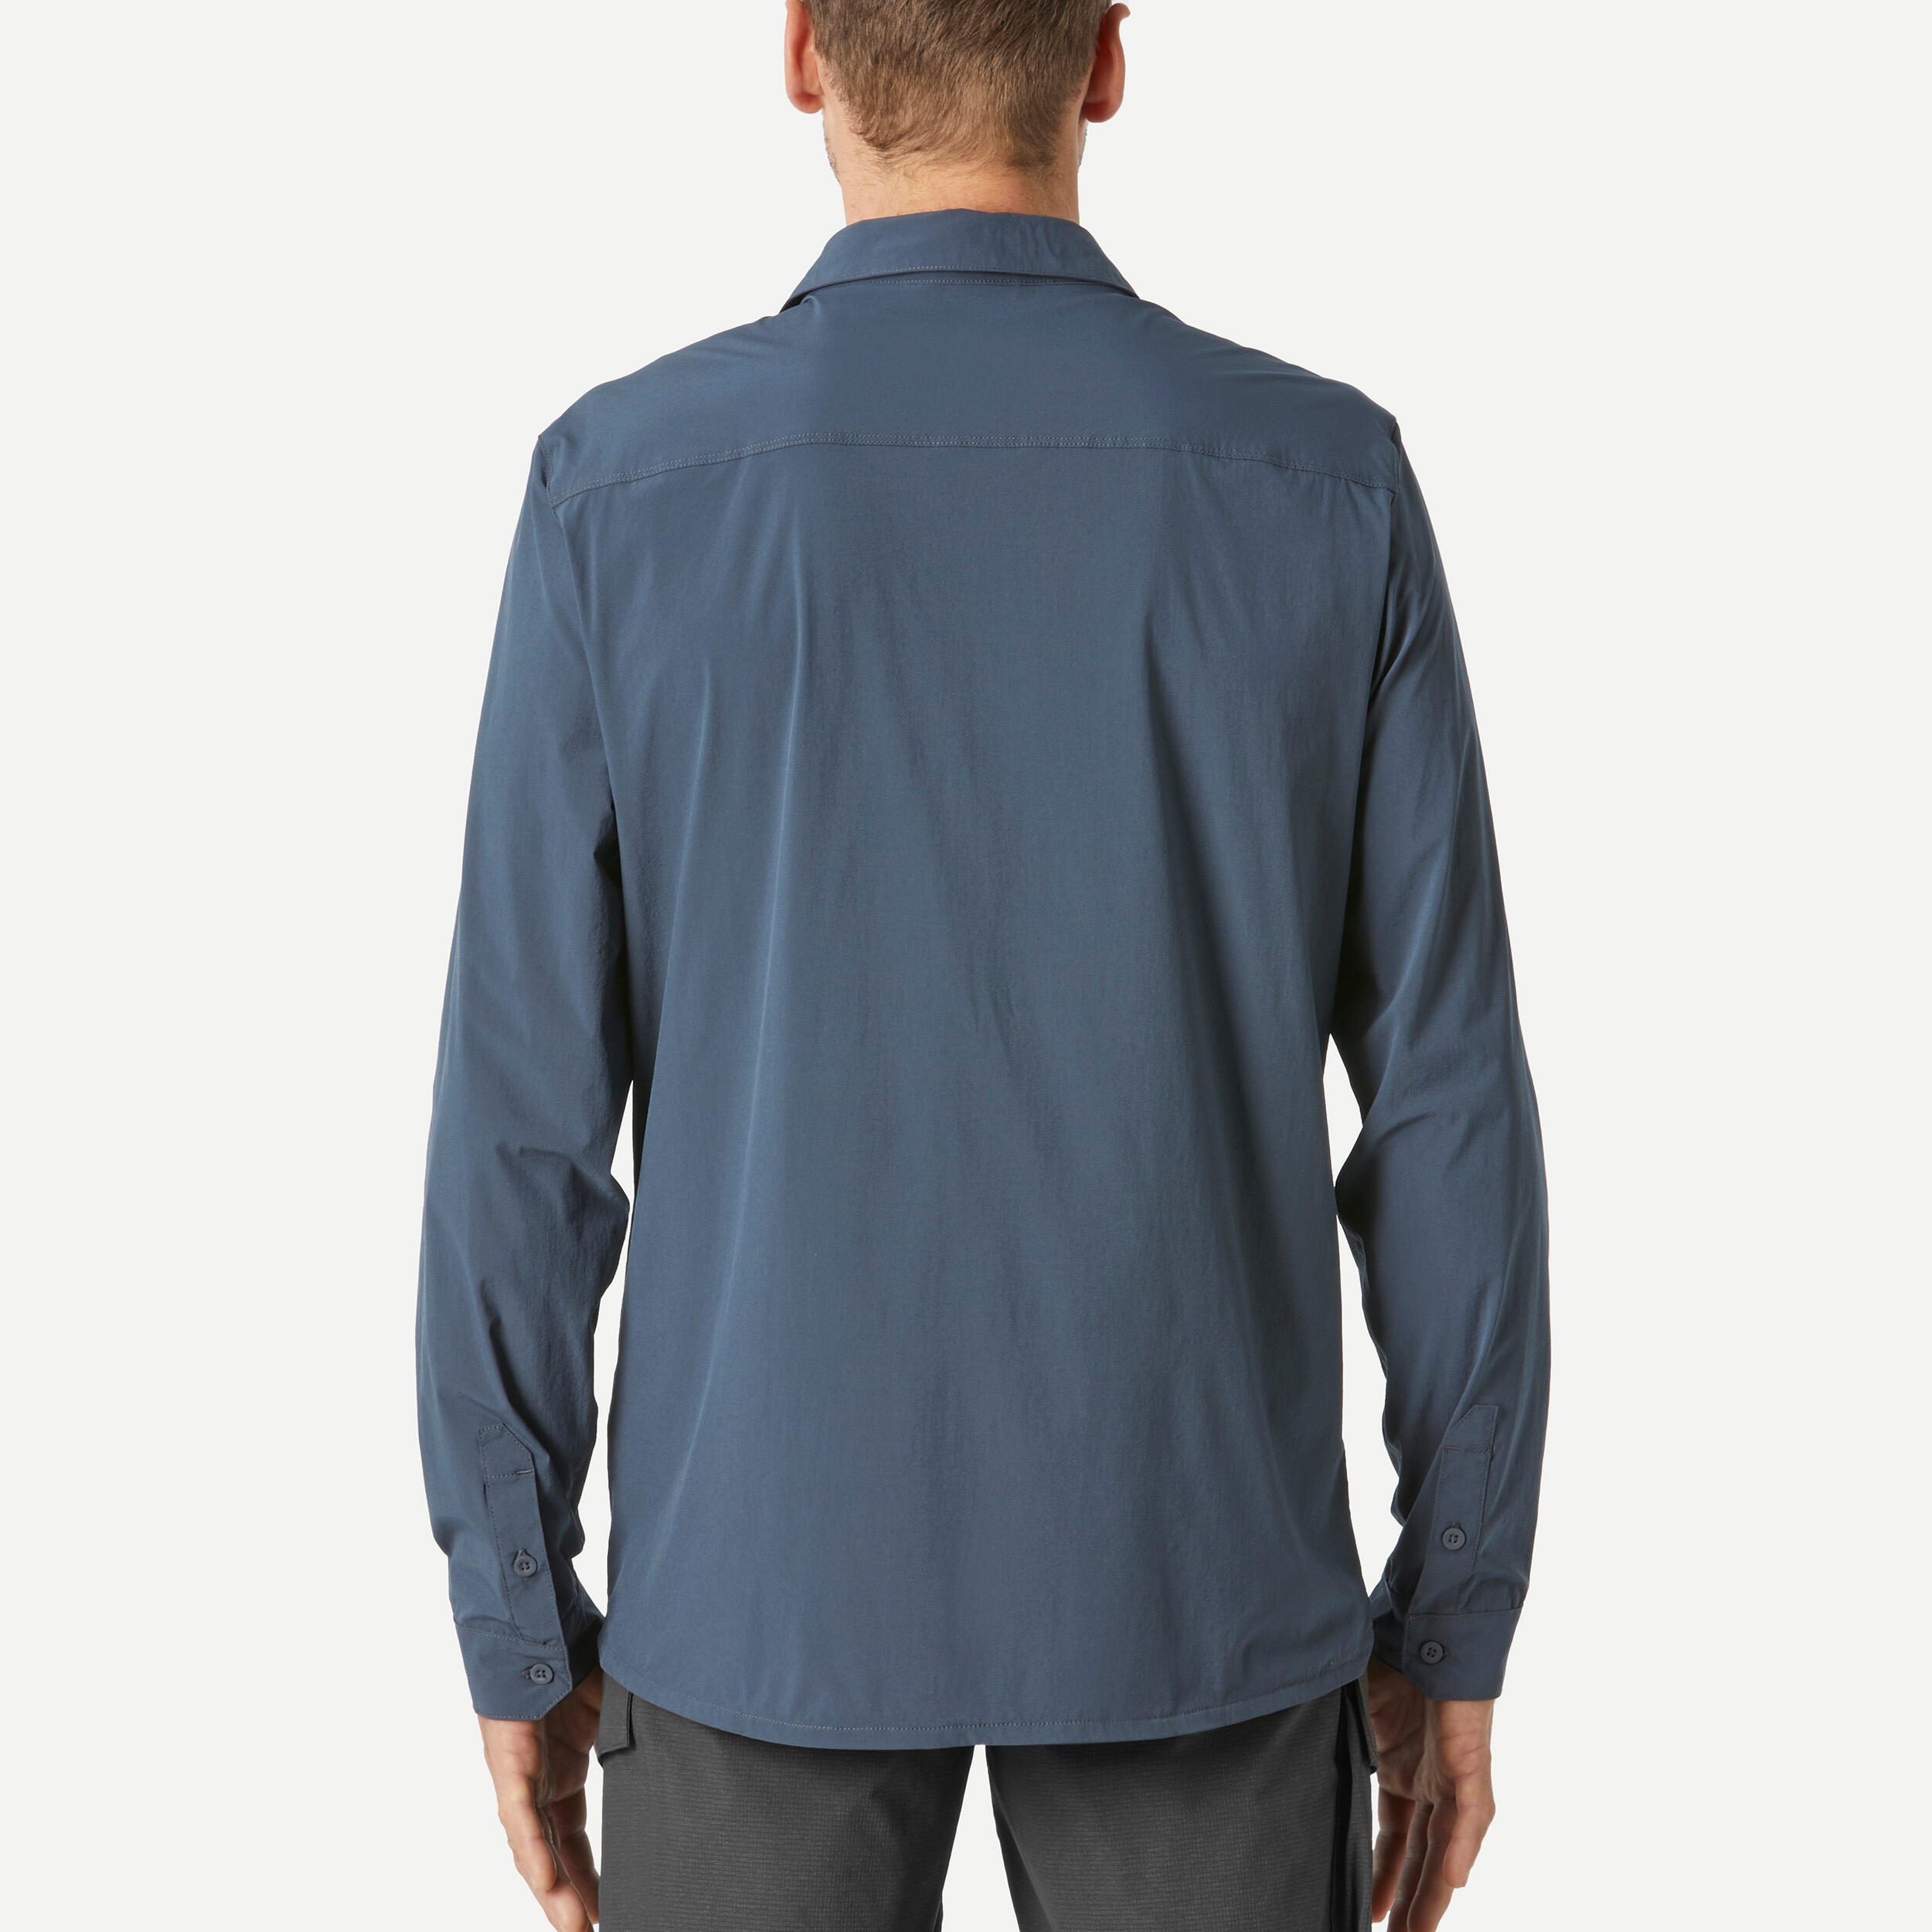 Men's anti-UV long-sleeved hiking travel shirt - Travel900 Grey 2/5